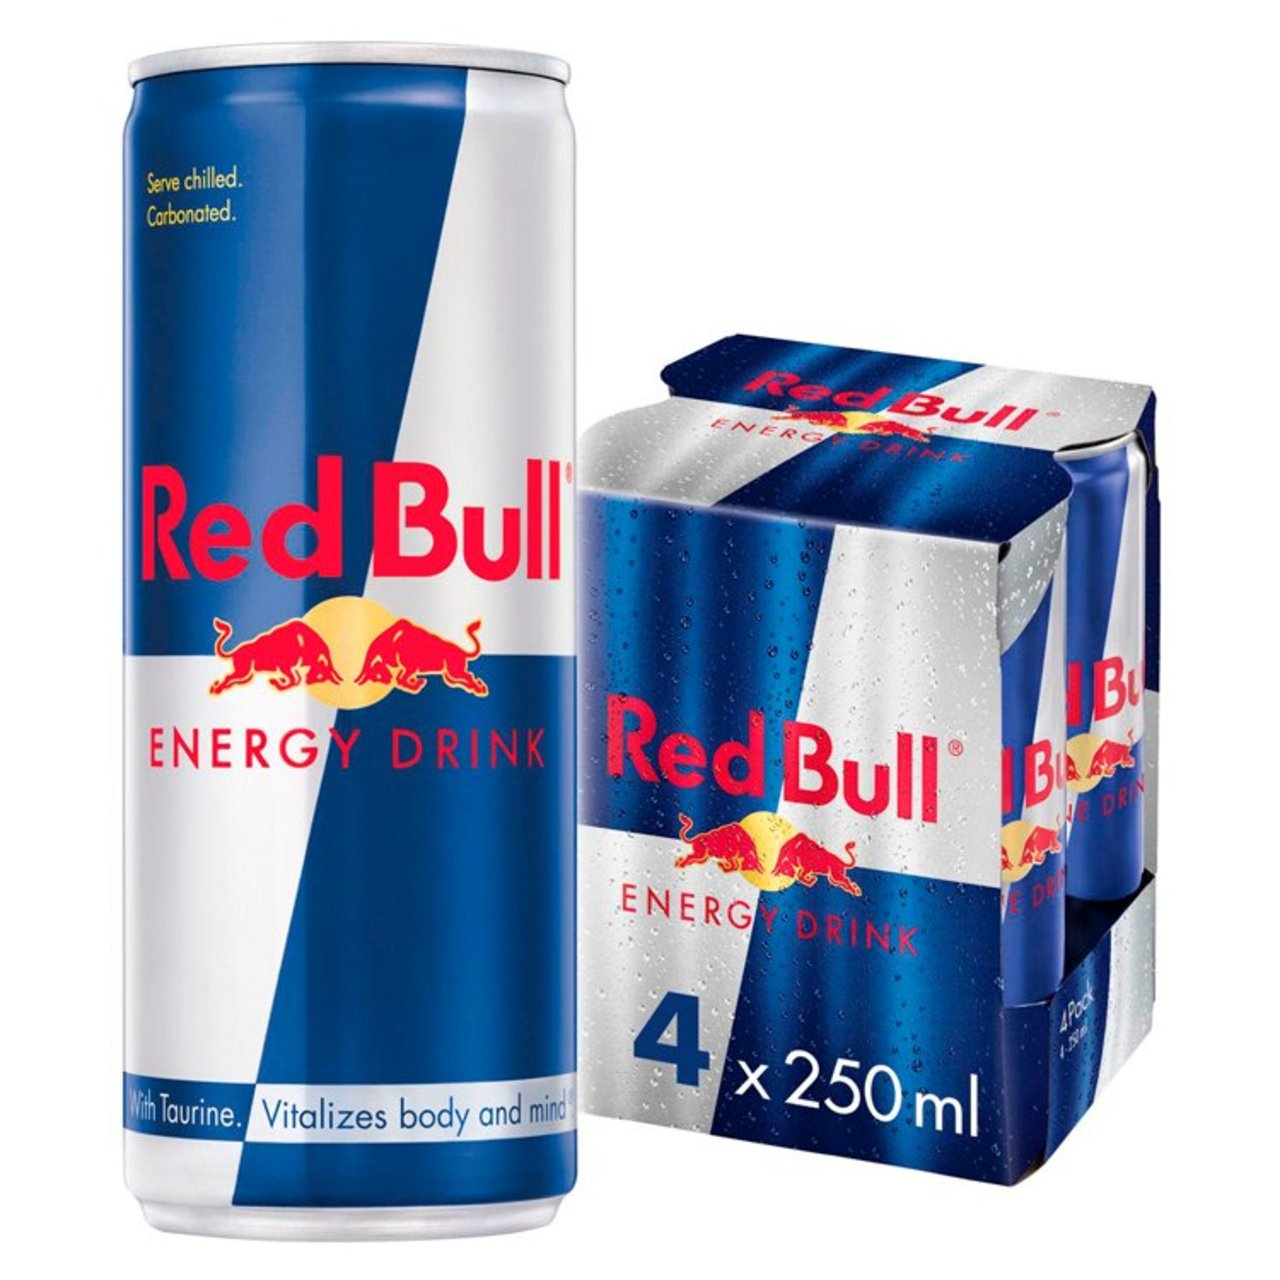 Red Bull Energy Drink 4 x 250ml*